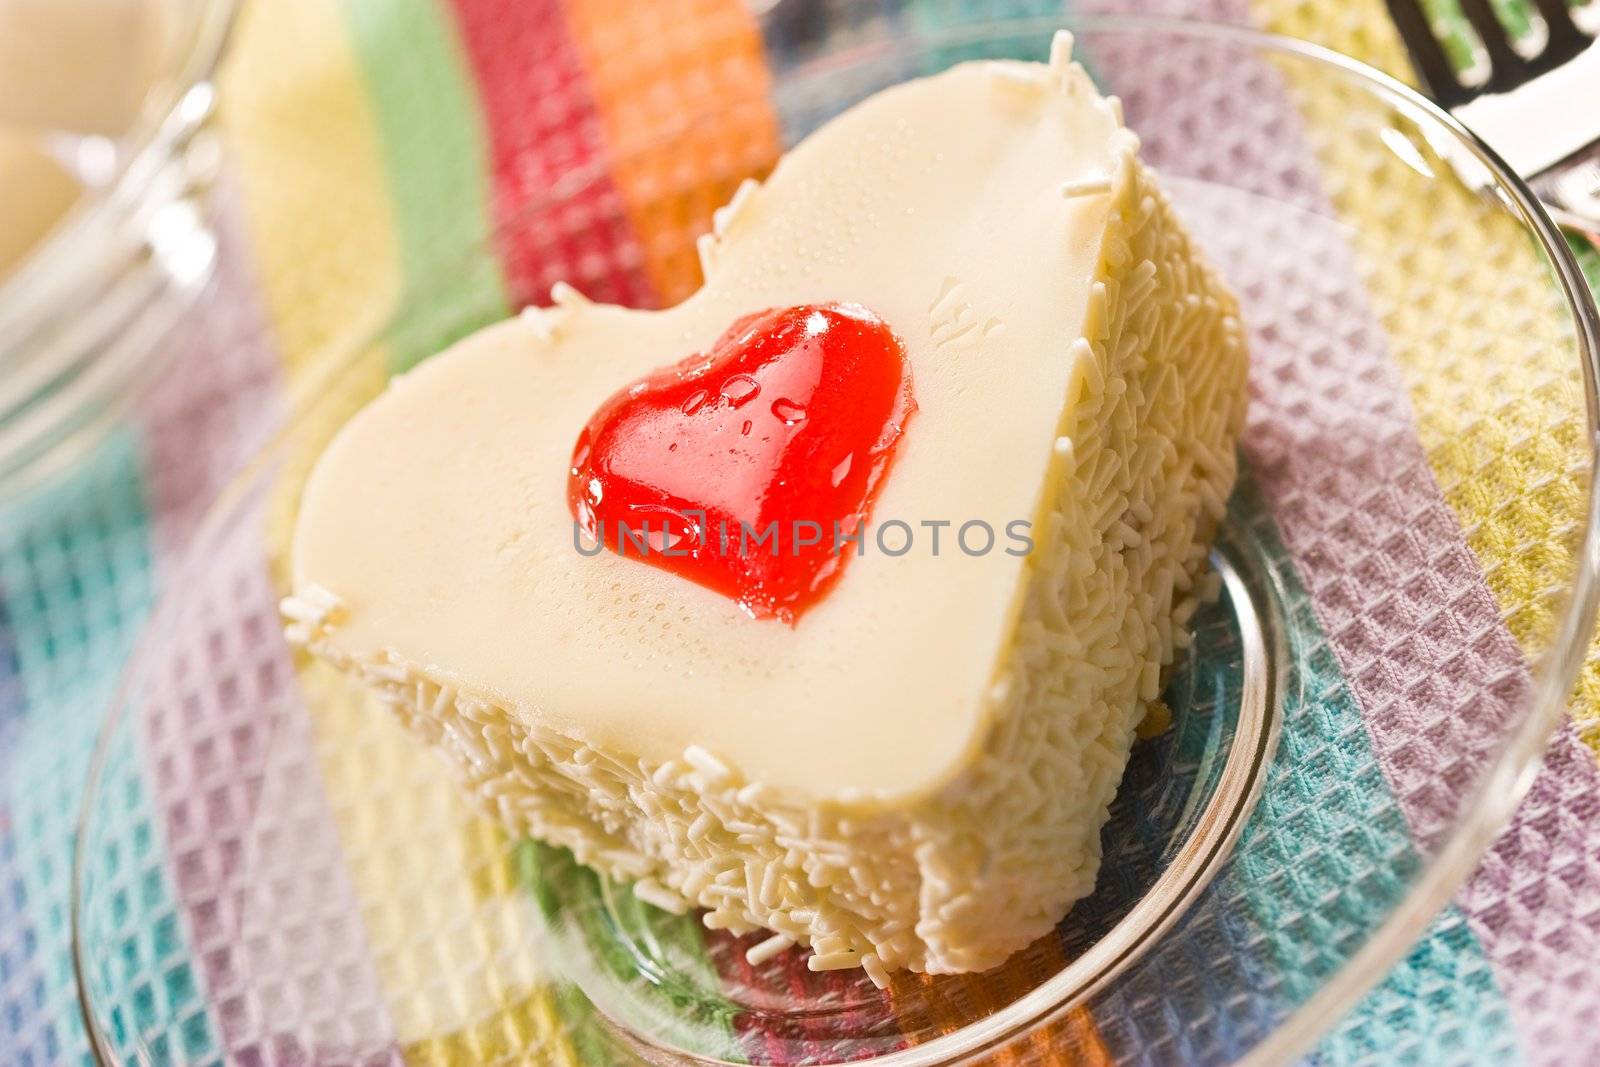 sweet: fancy cake with love simbol - heart